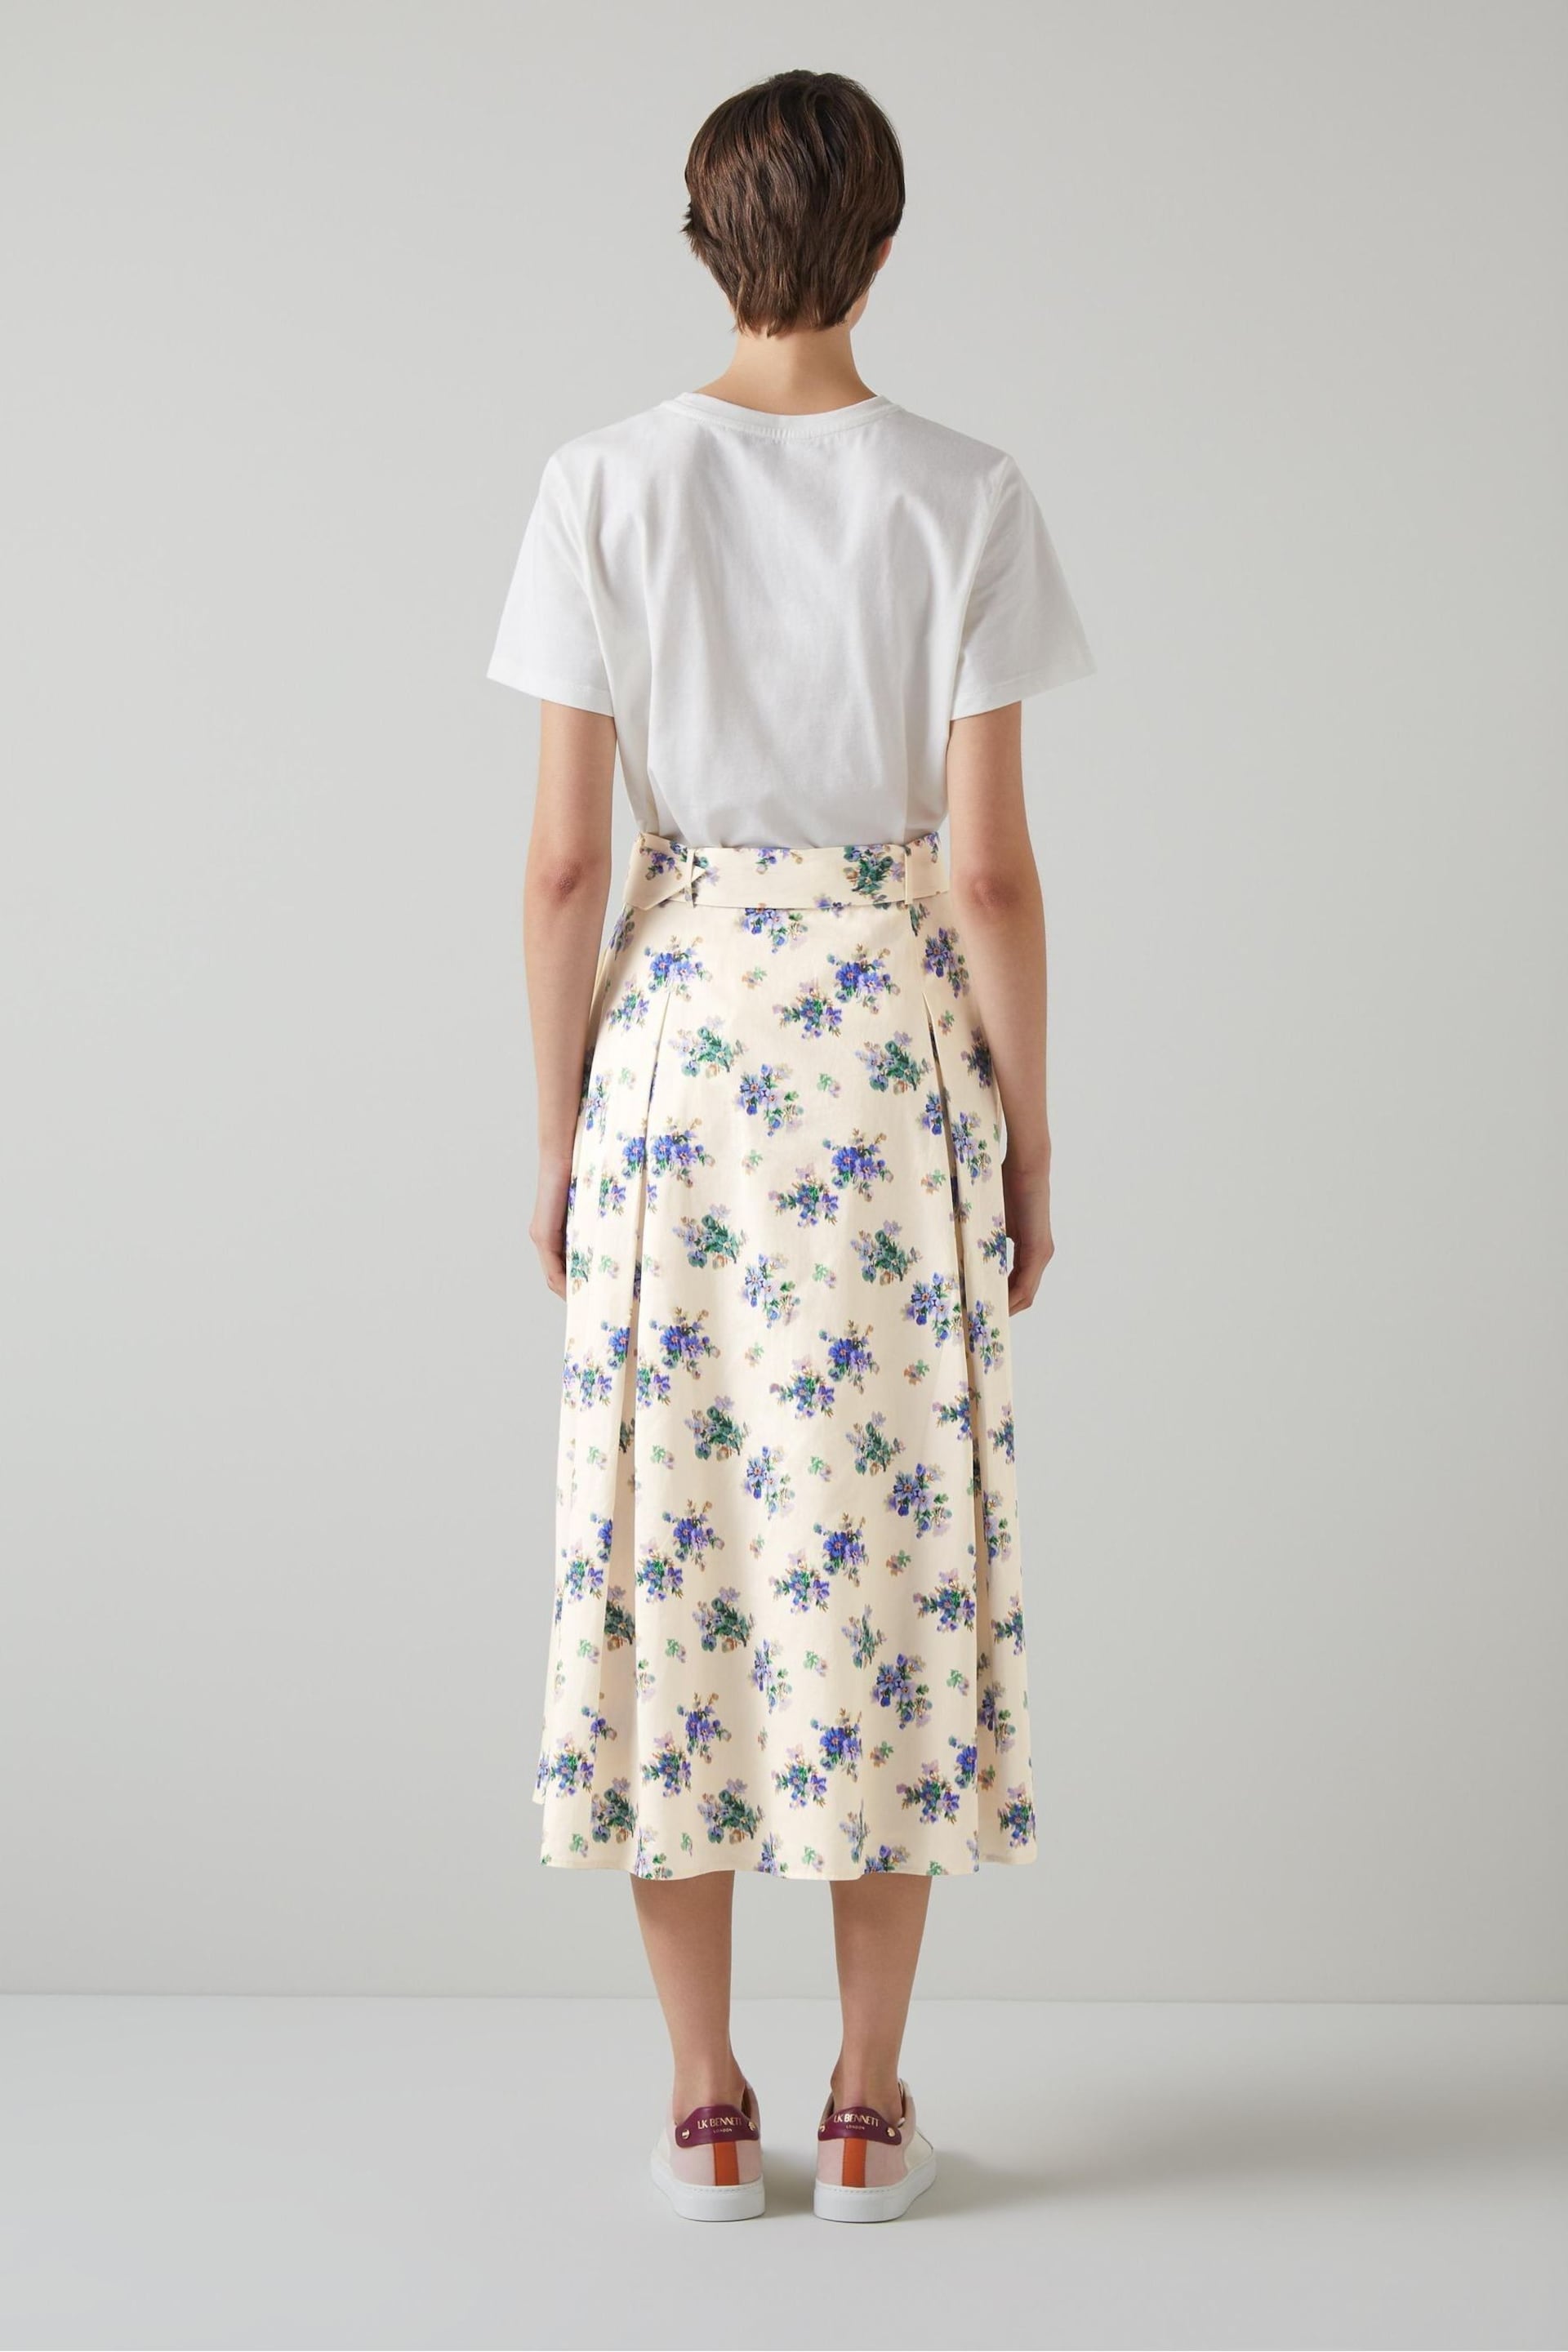 LK Bennett Elodie Bouquet Print Cotton Skirt - Image 2 of 3